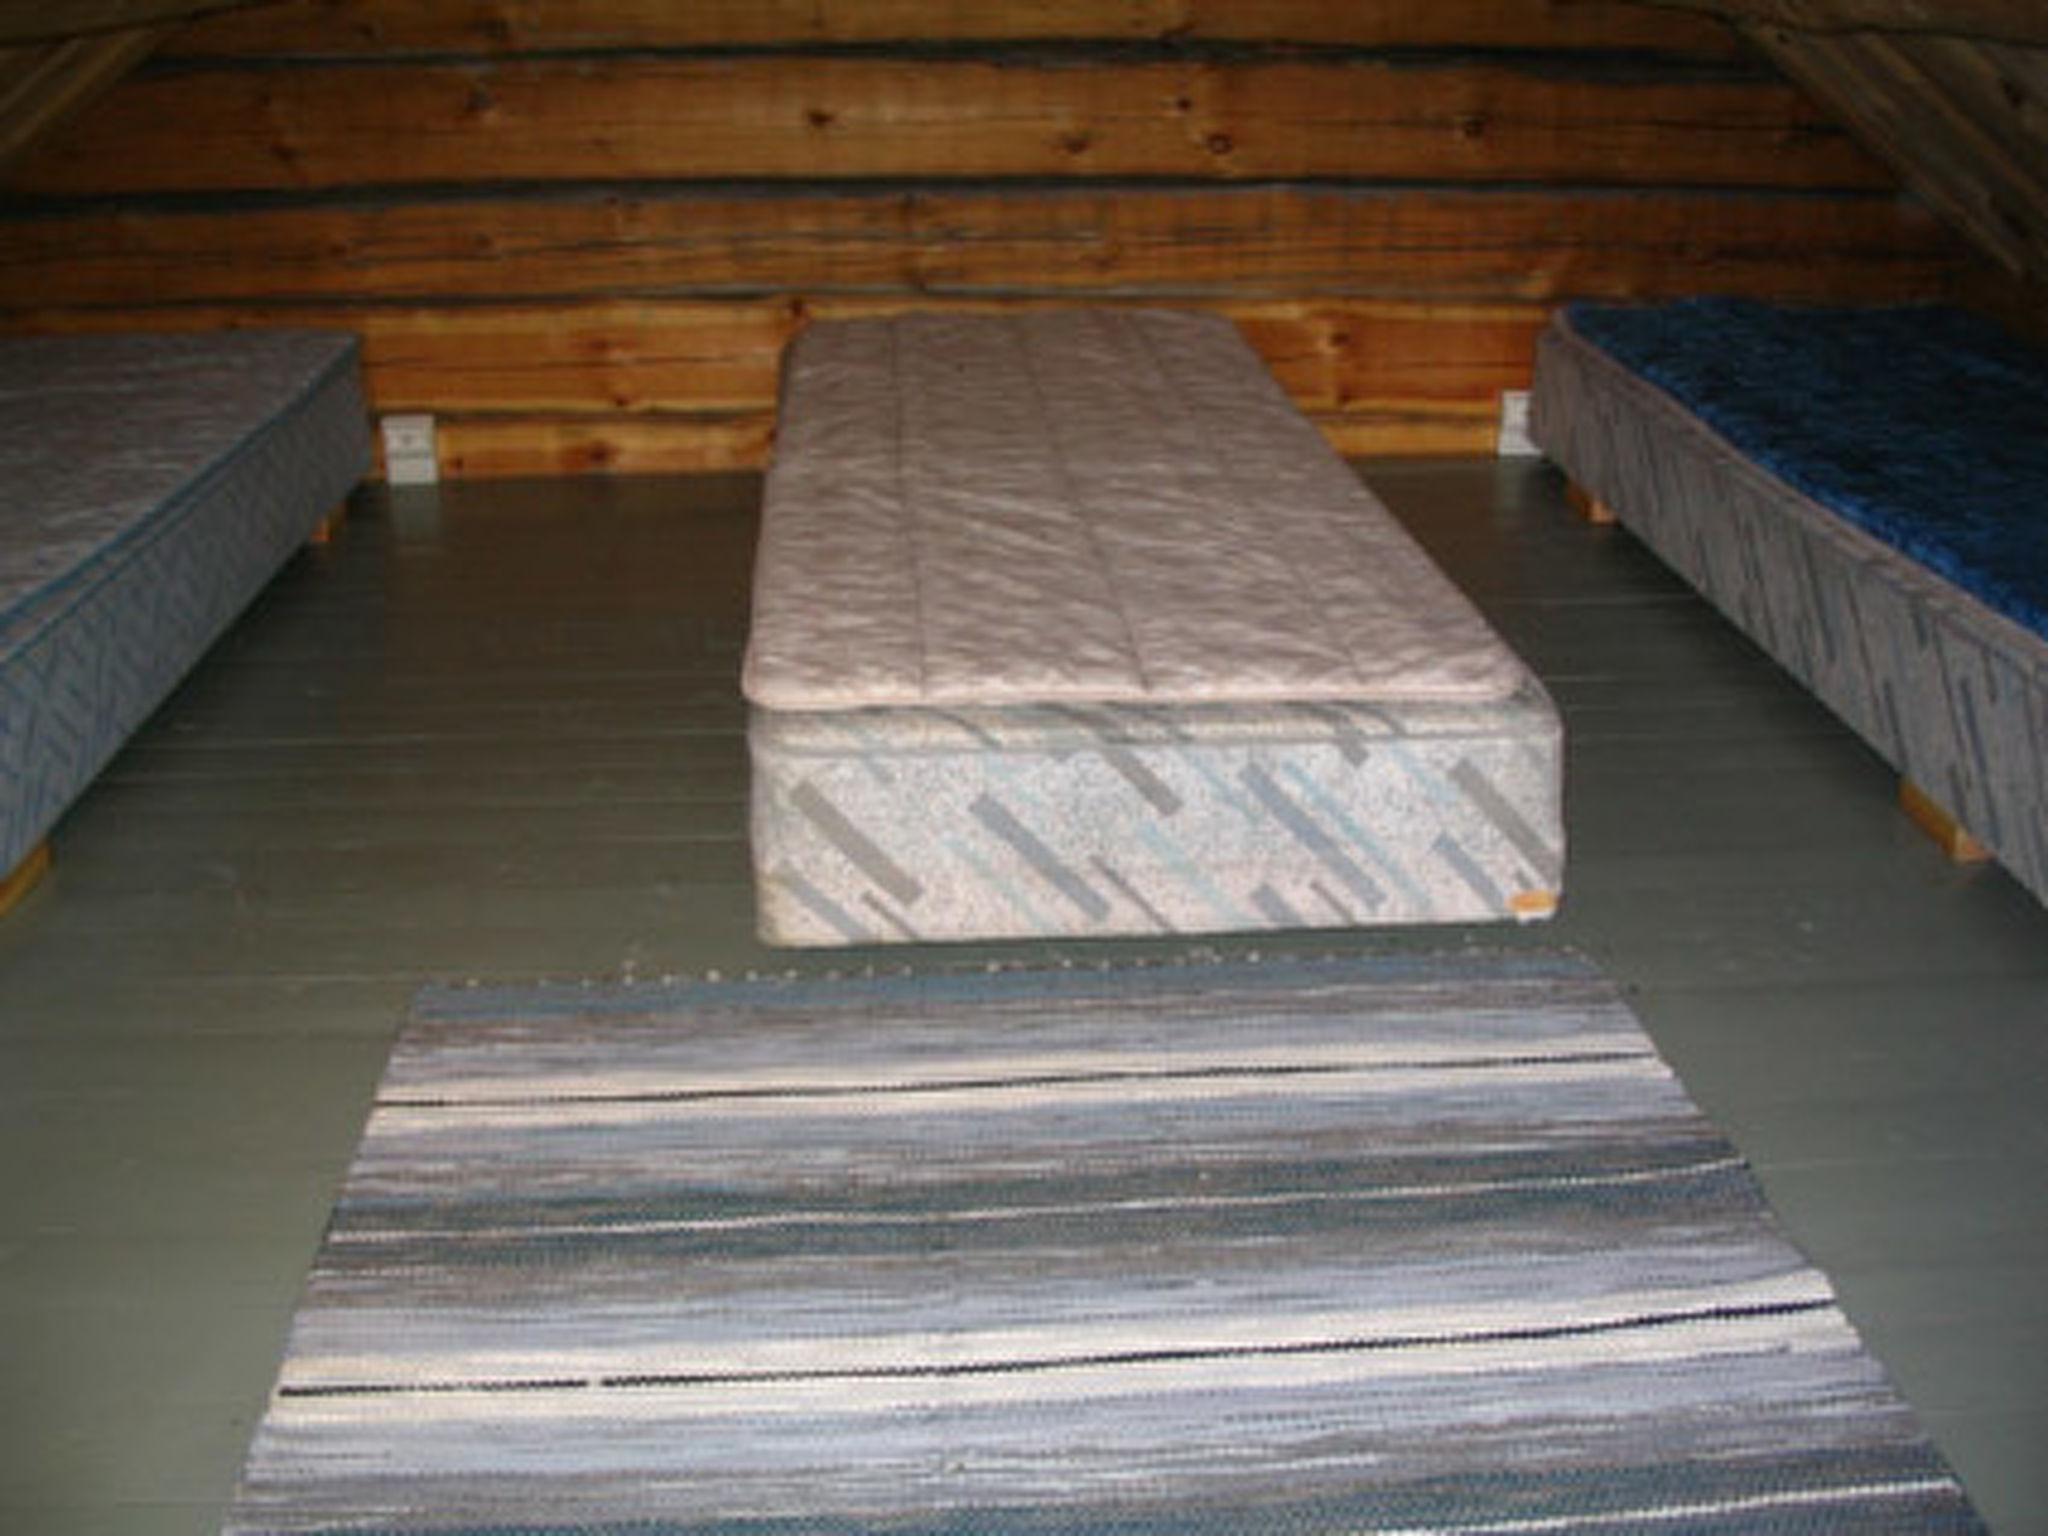 Photo 16 - 4 bedroom House in Kuusamo with sauna and mountain view